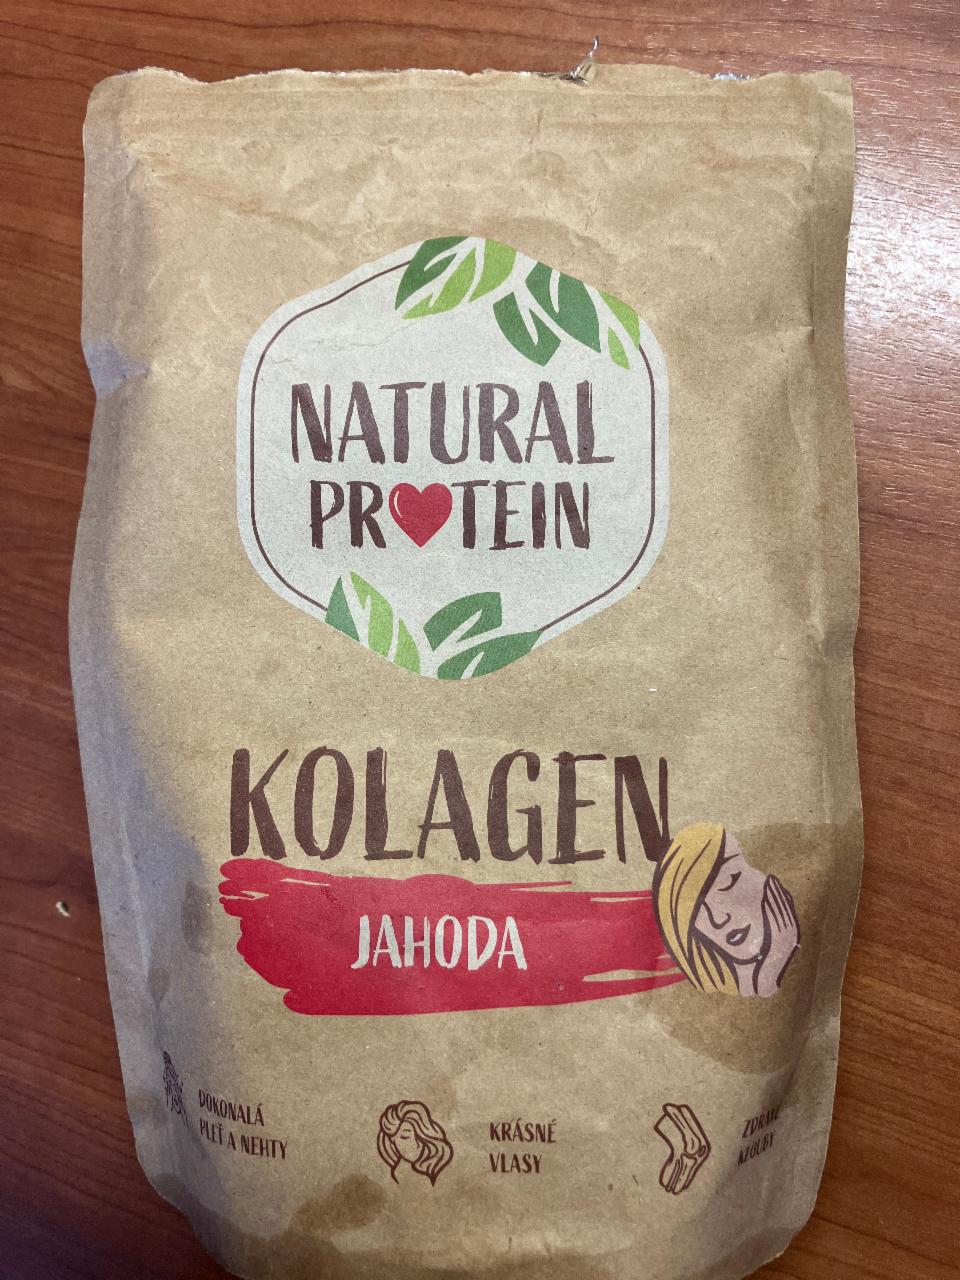 Fotografie - Kolagen jahoda Natural protein